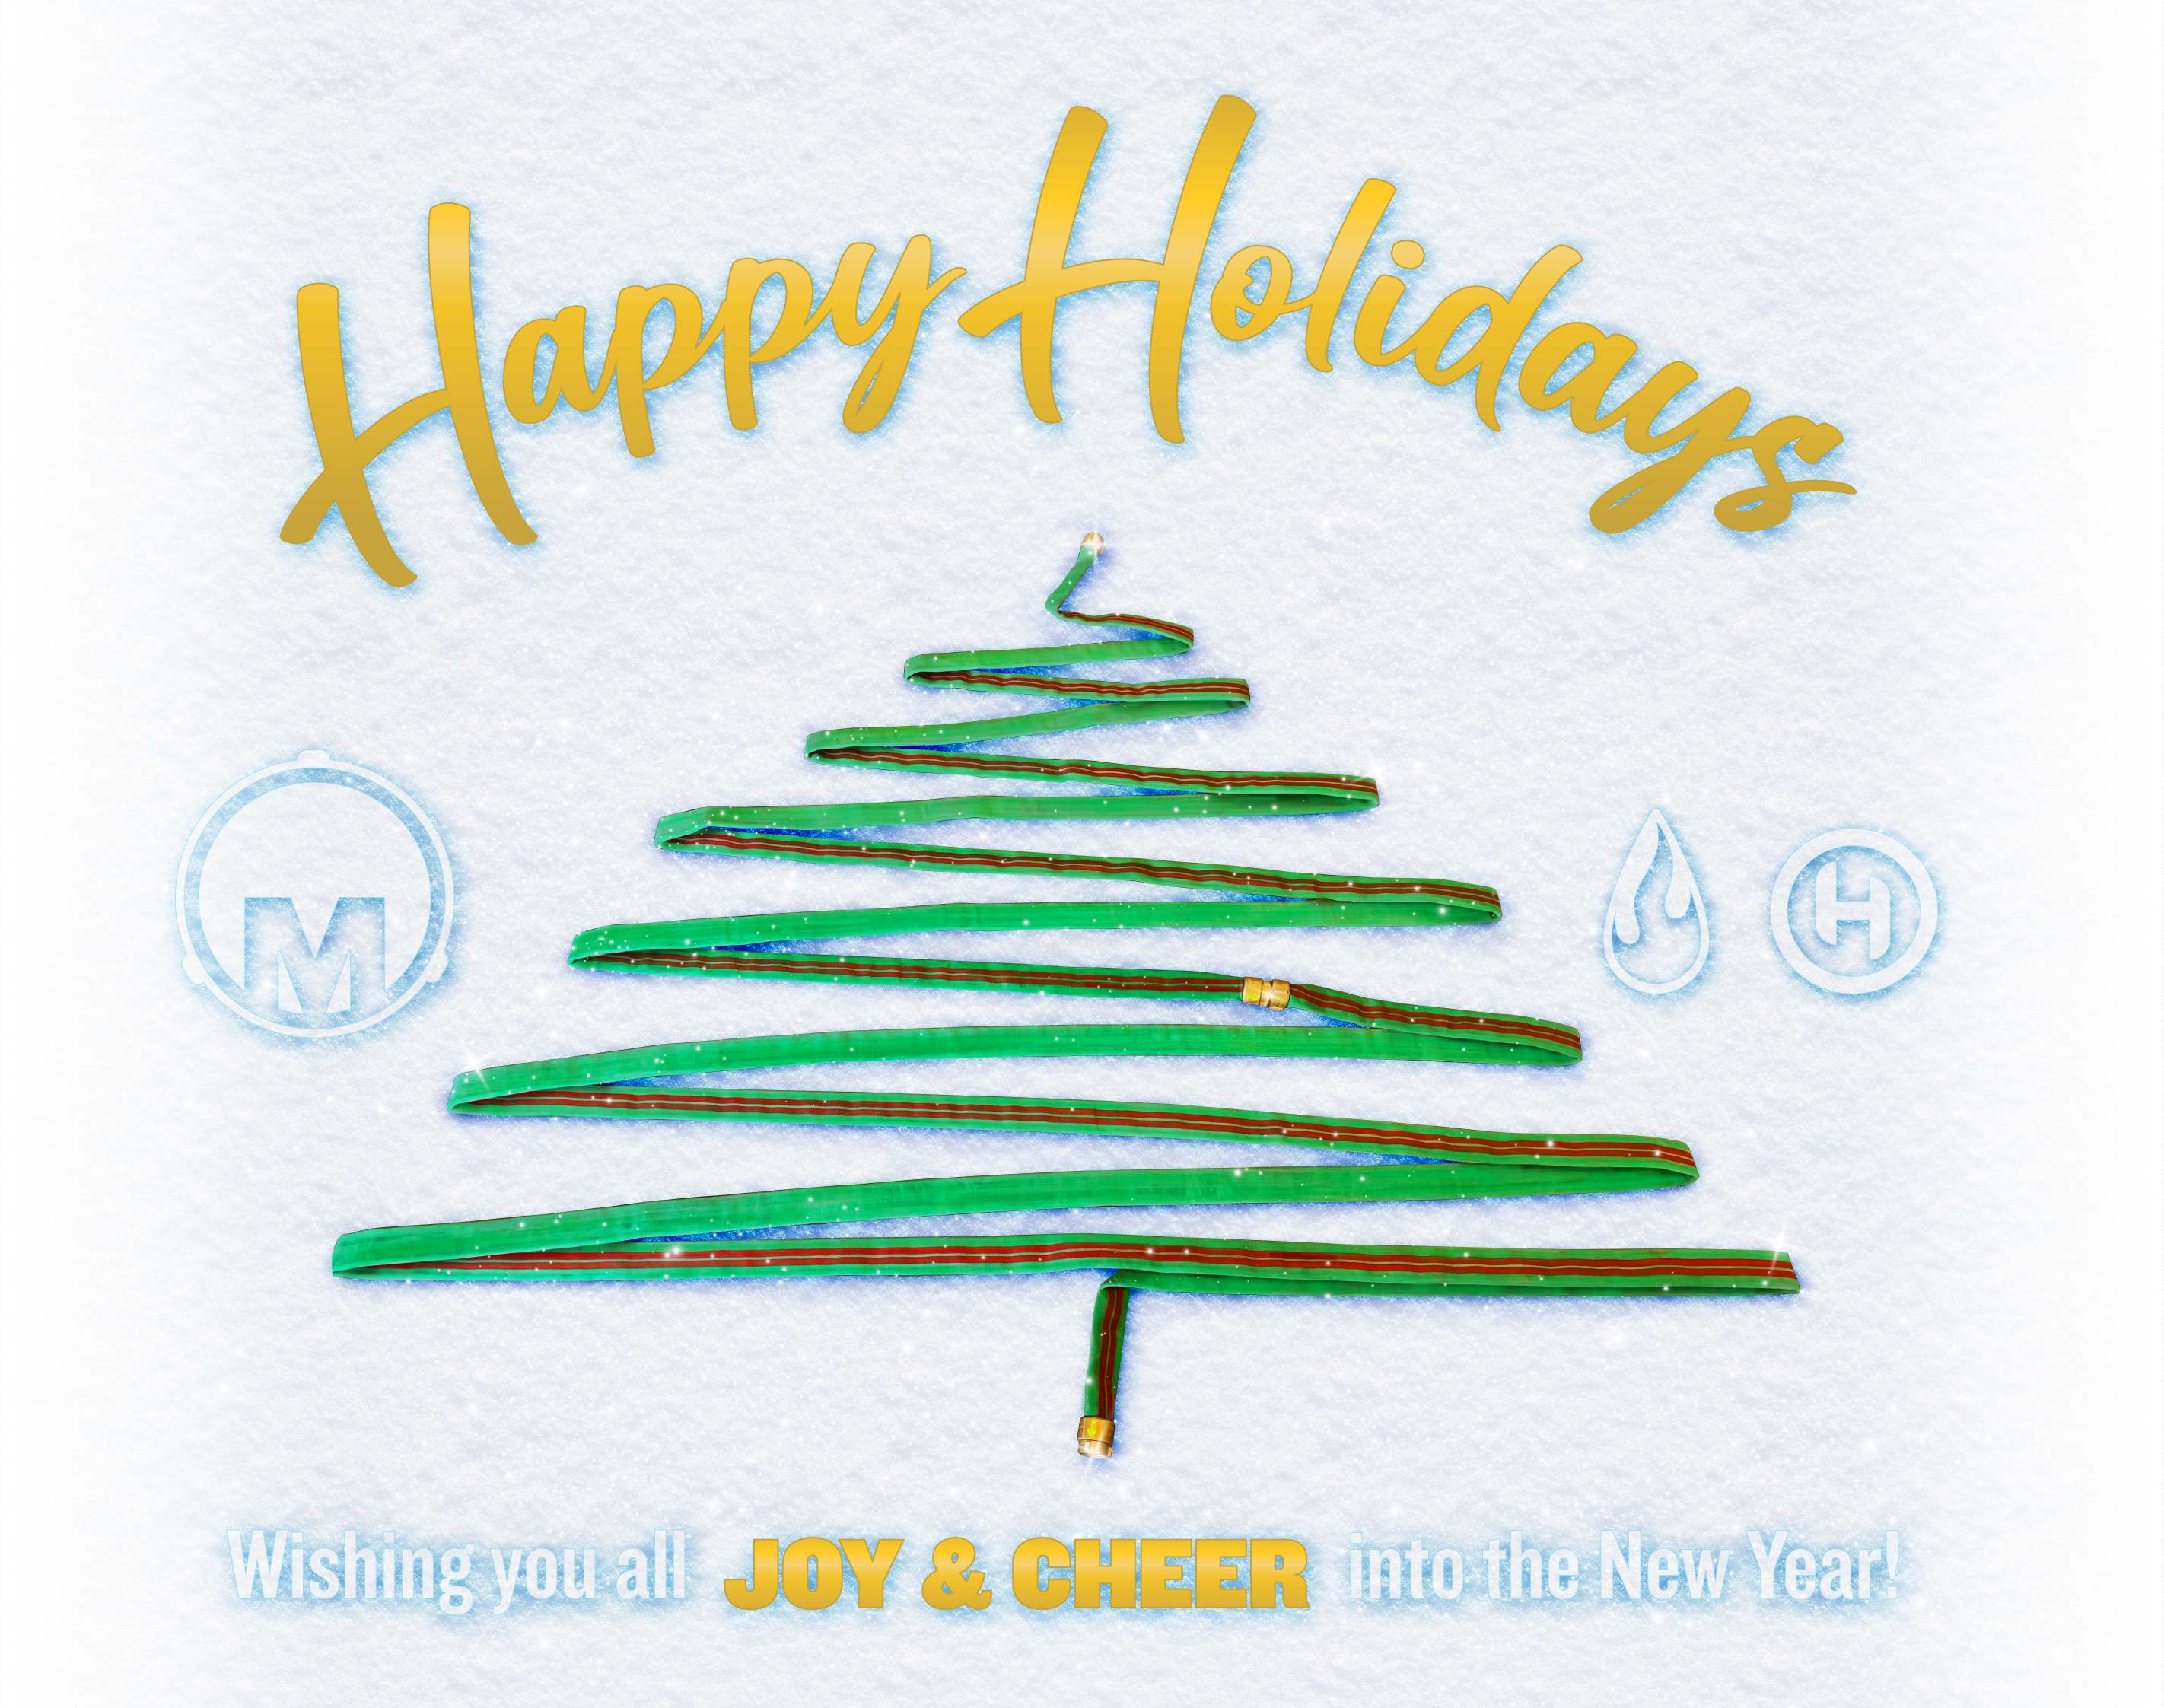 Happy Holidays – Wishing you Joy & Cheer into the New Year!